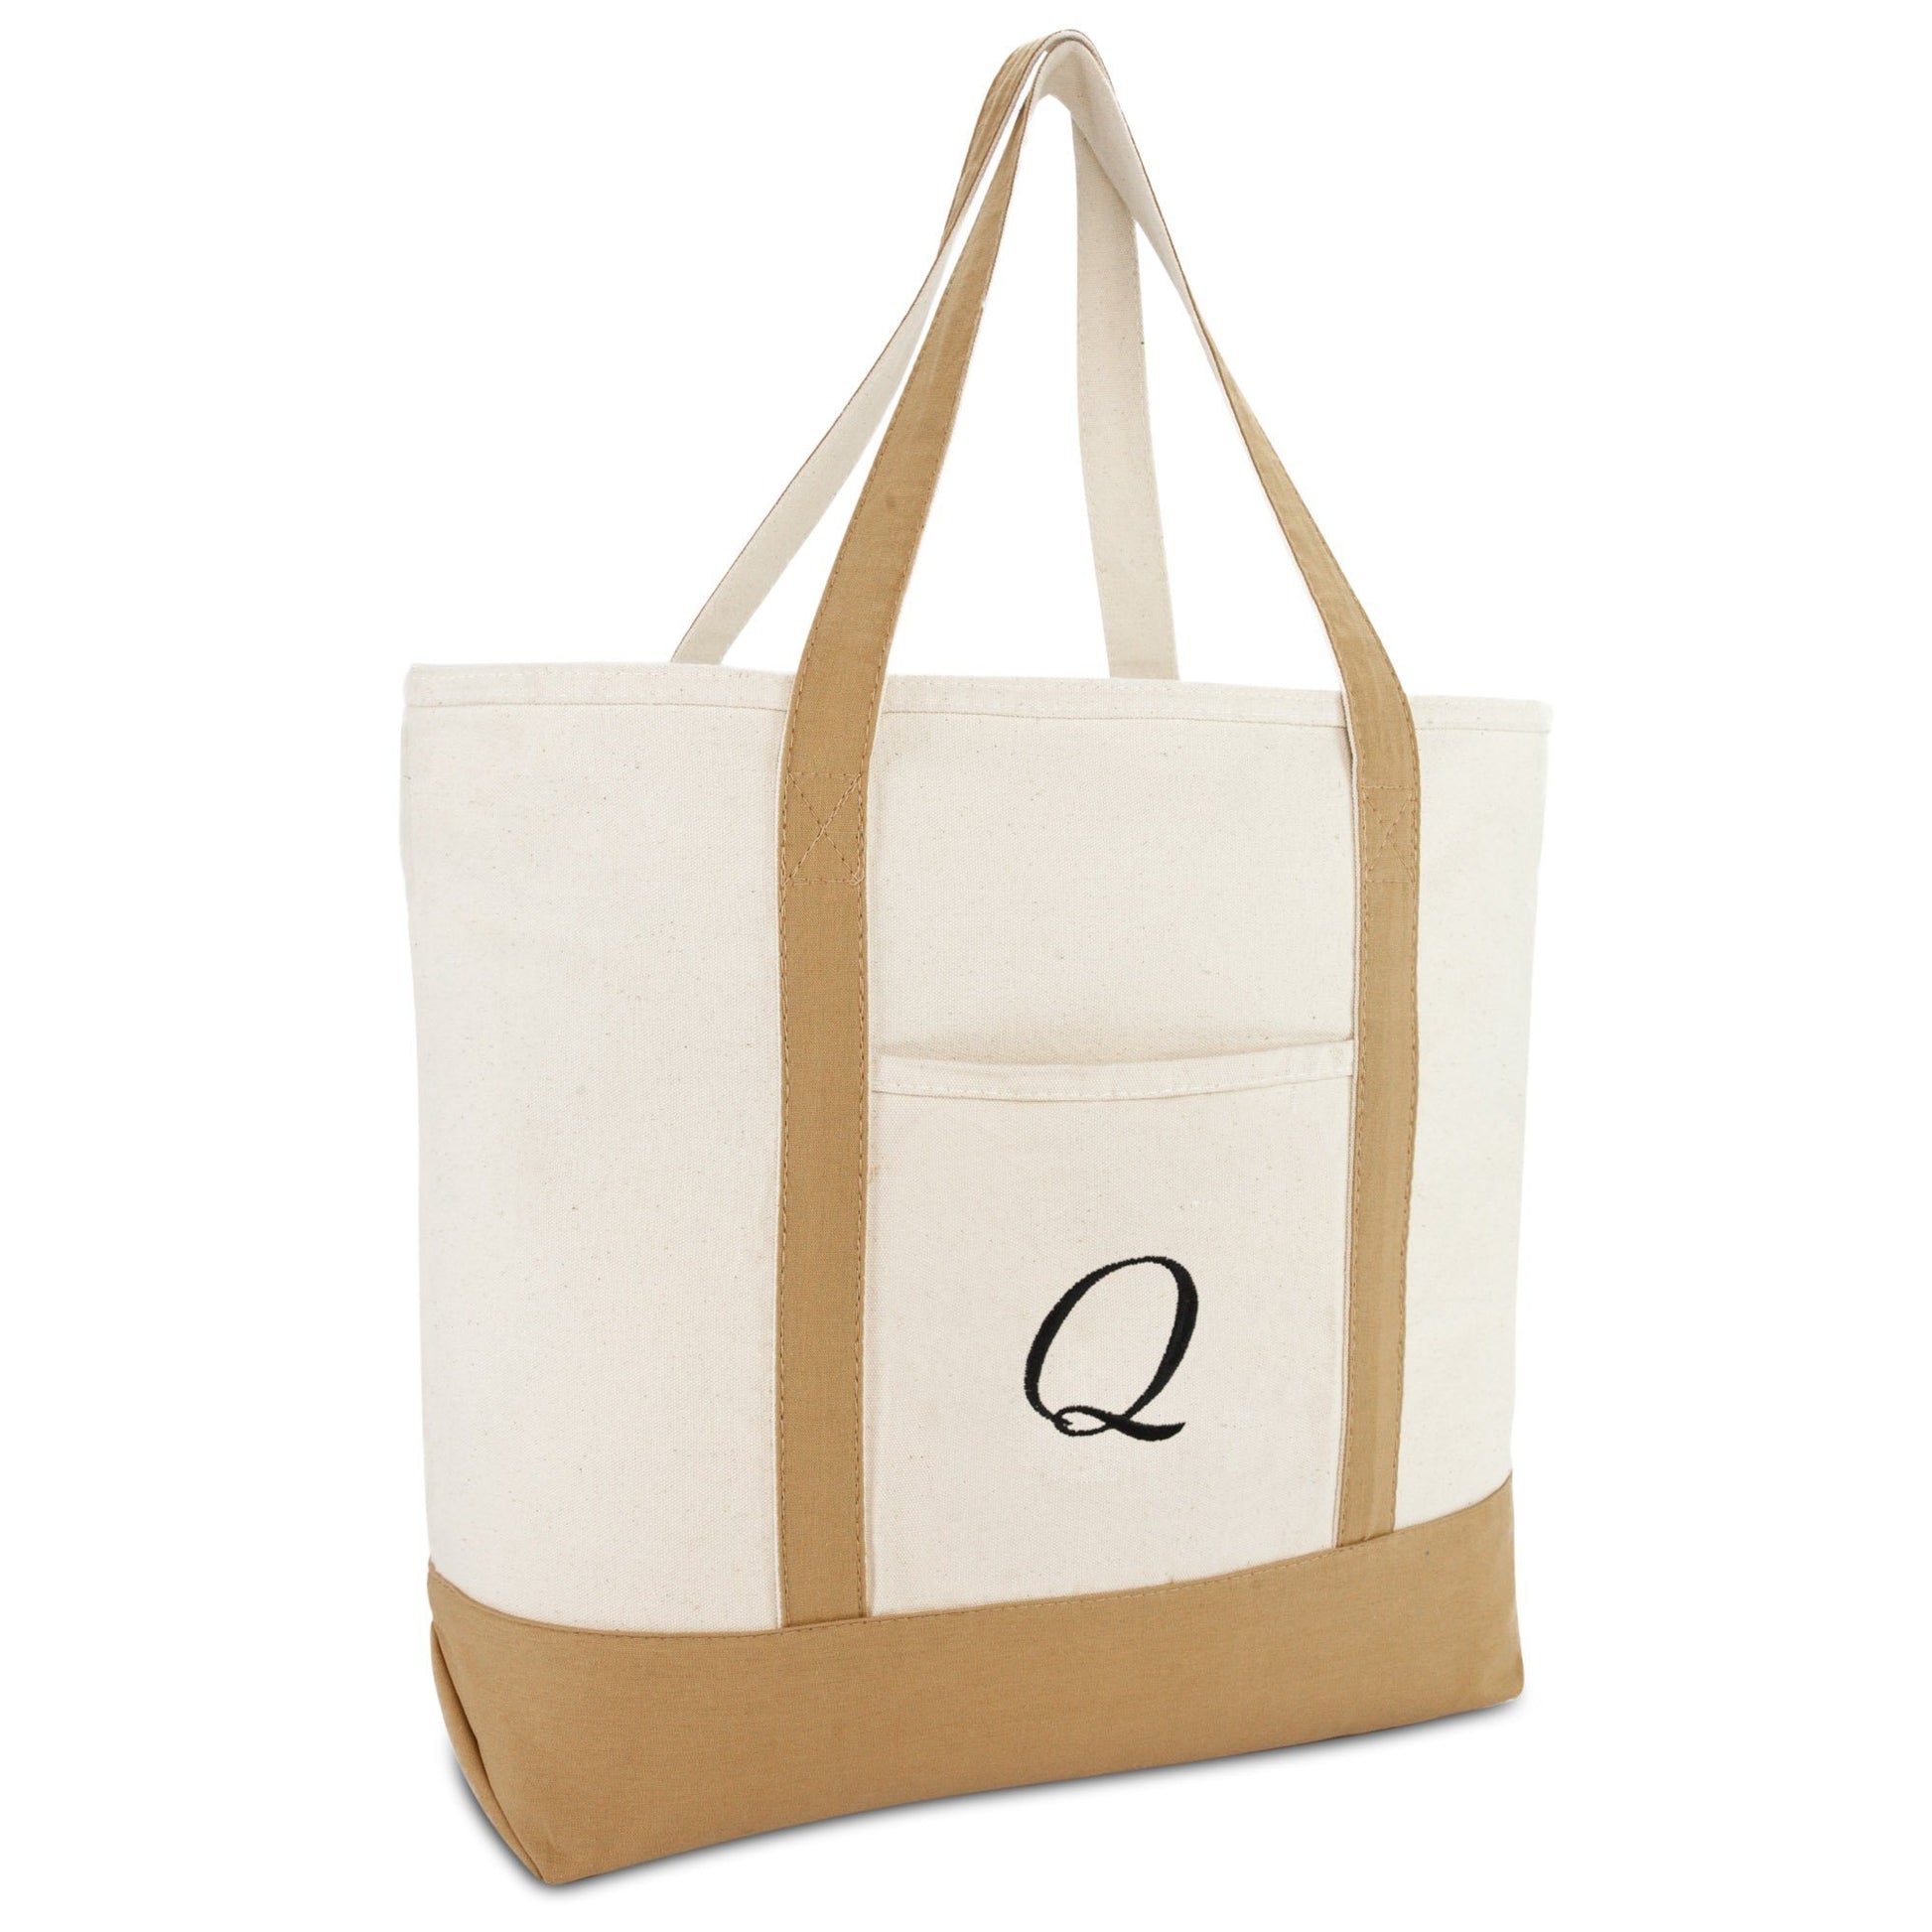 DALIX Tote Bag Satchel Shoulder Bags for Women Beach Totes Brown Ballent A-Z Shopping Totes DALIX Brown Q 